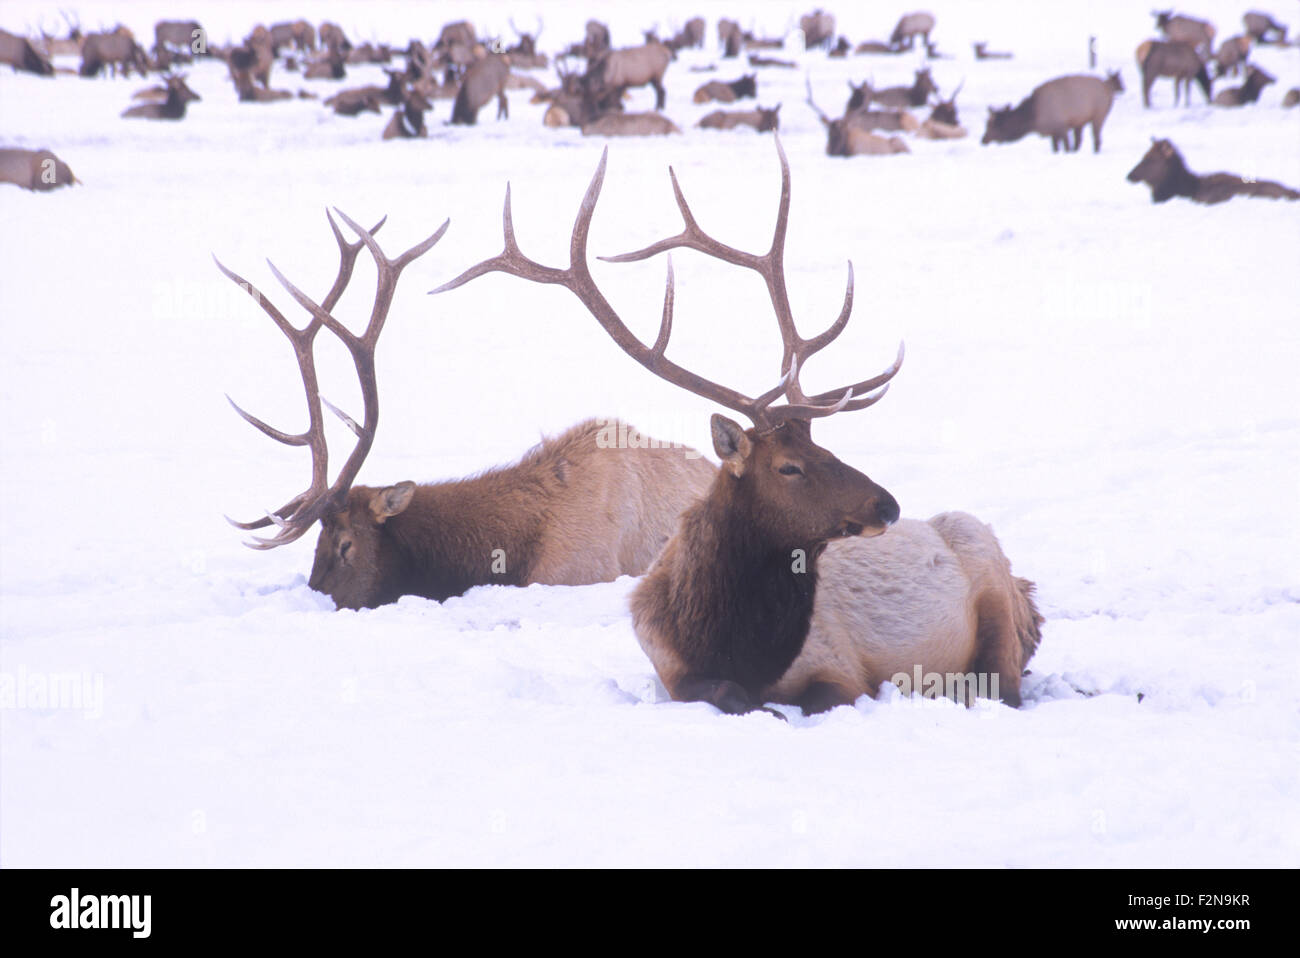 The National Elk Refuge provides a winter feeding ground for nearly 10,000 elk, Jackson Hole, Wyoming, USA. Stock Photo